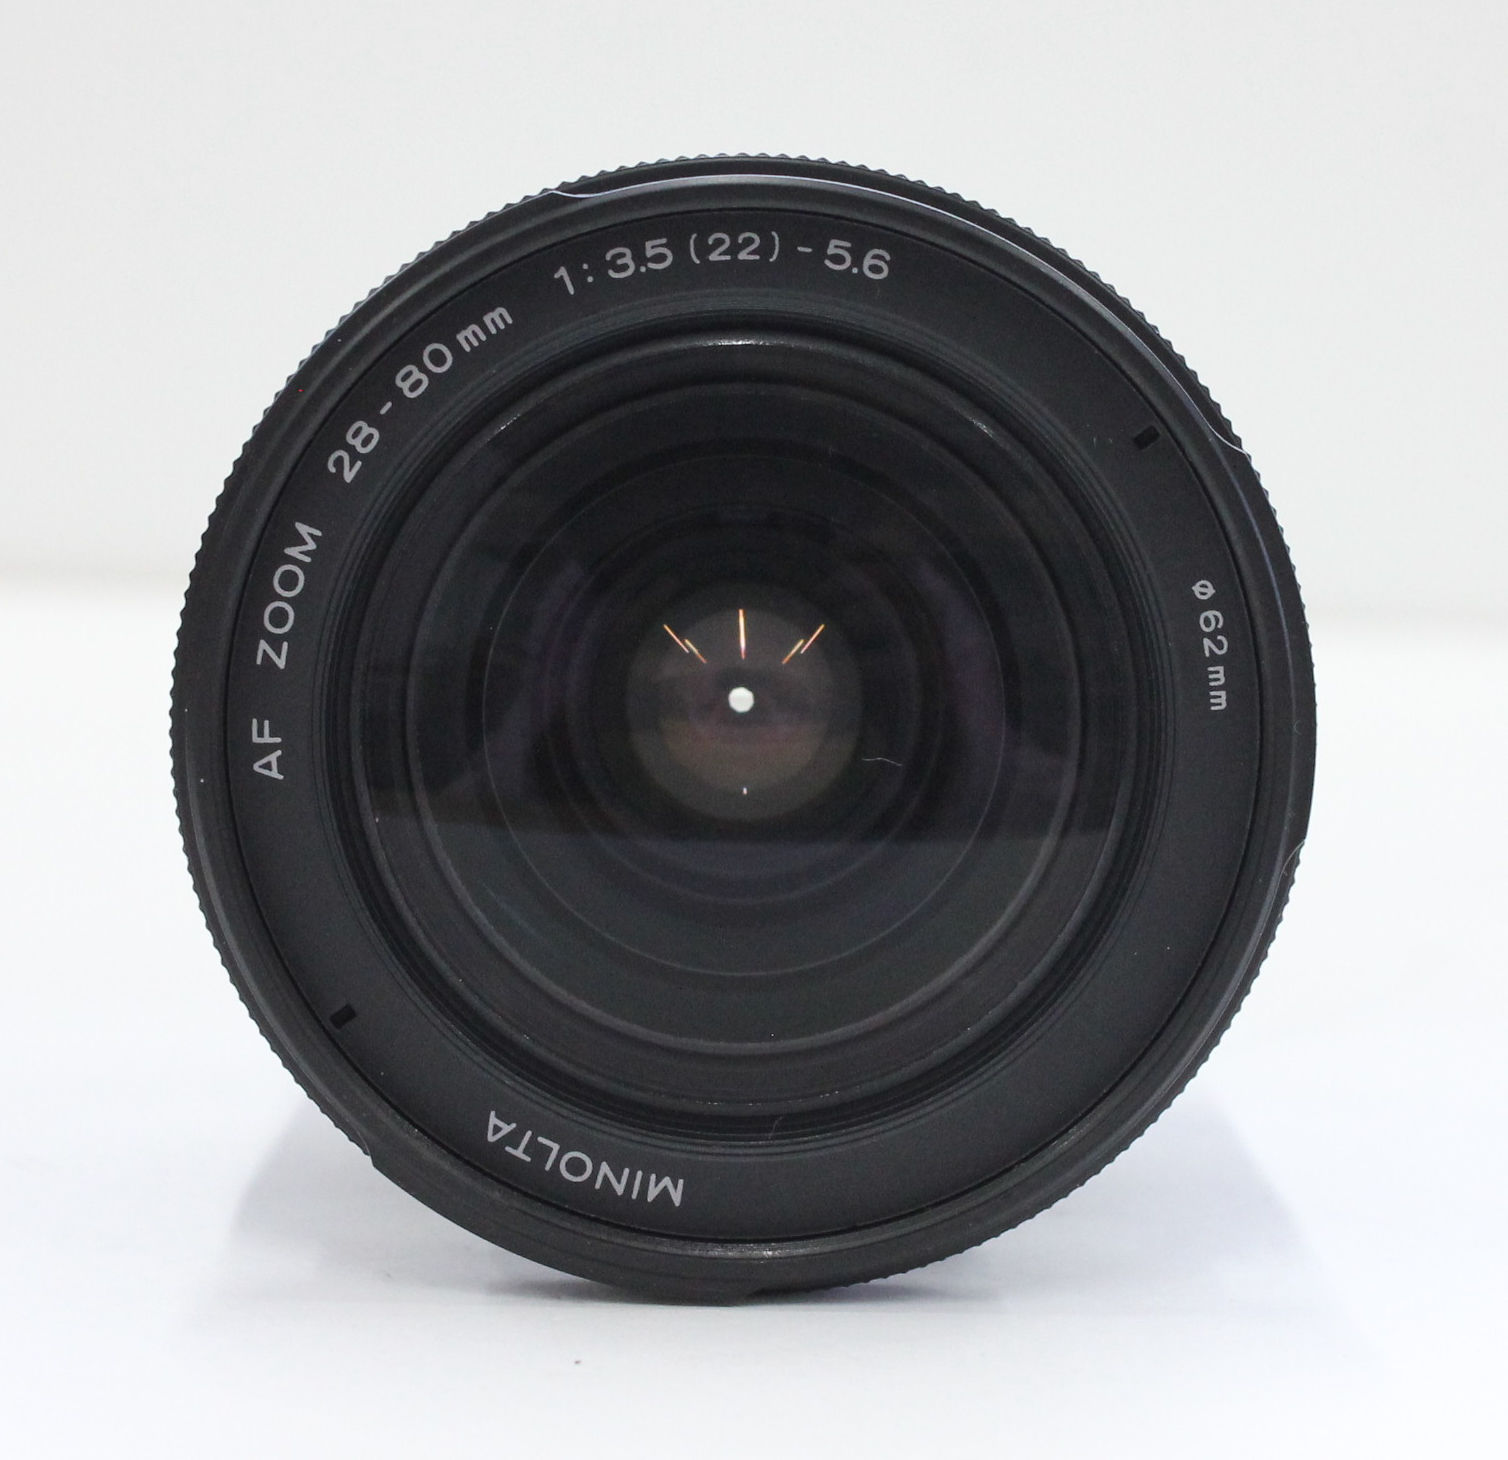  MINOLTA AF ZOOM 28-80mm F/3.5-5.6 A-Mount Lens for Minolta or Sony Photo 2